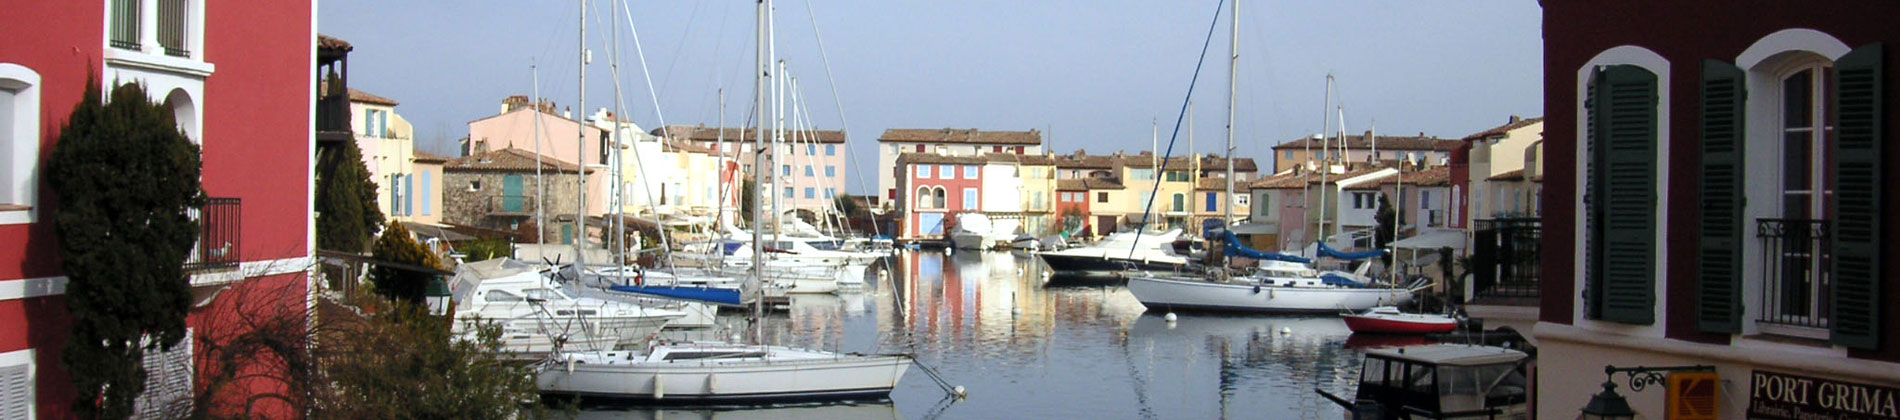 Port Grimaud